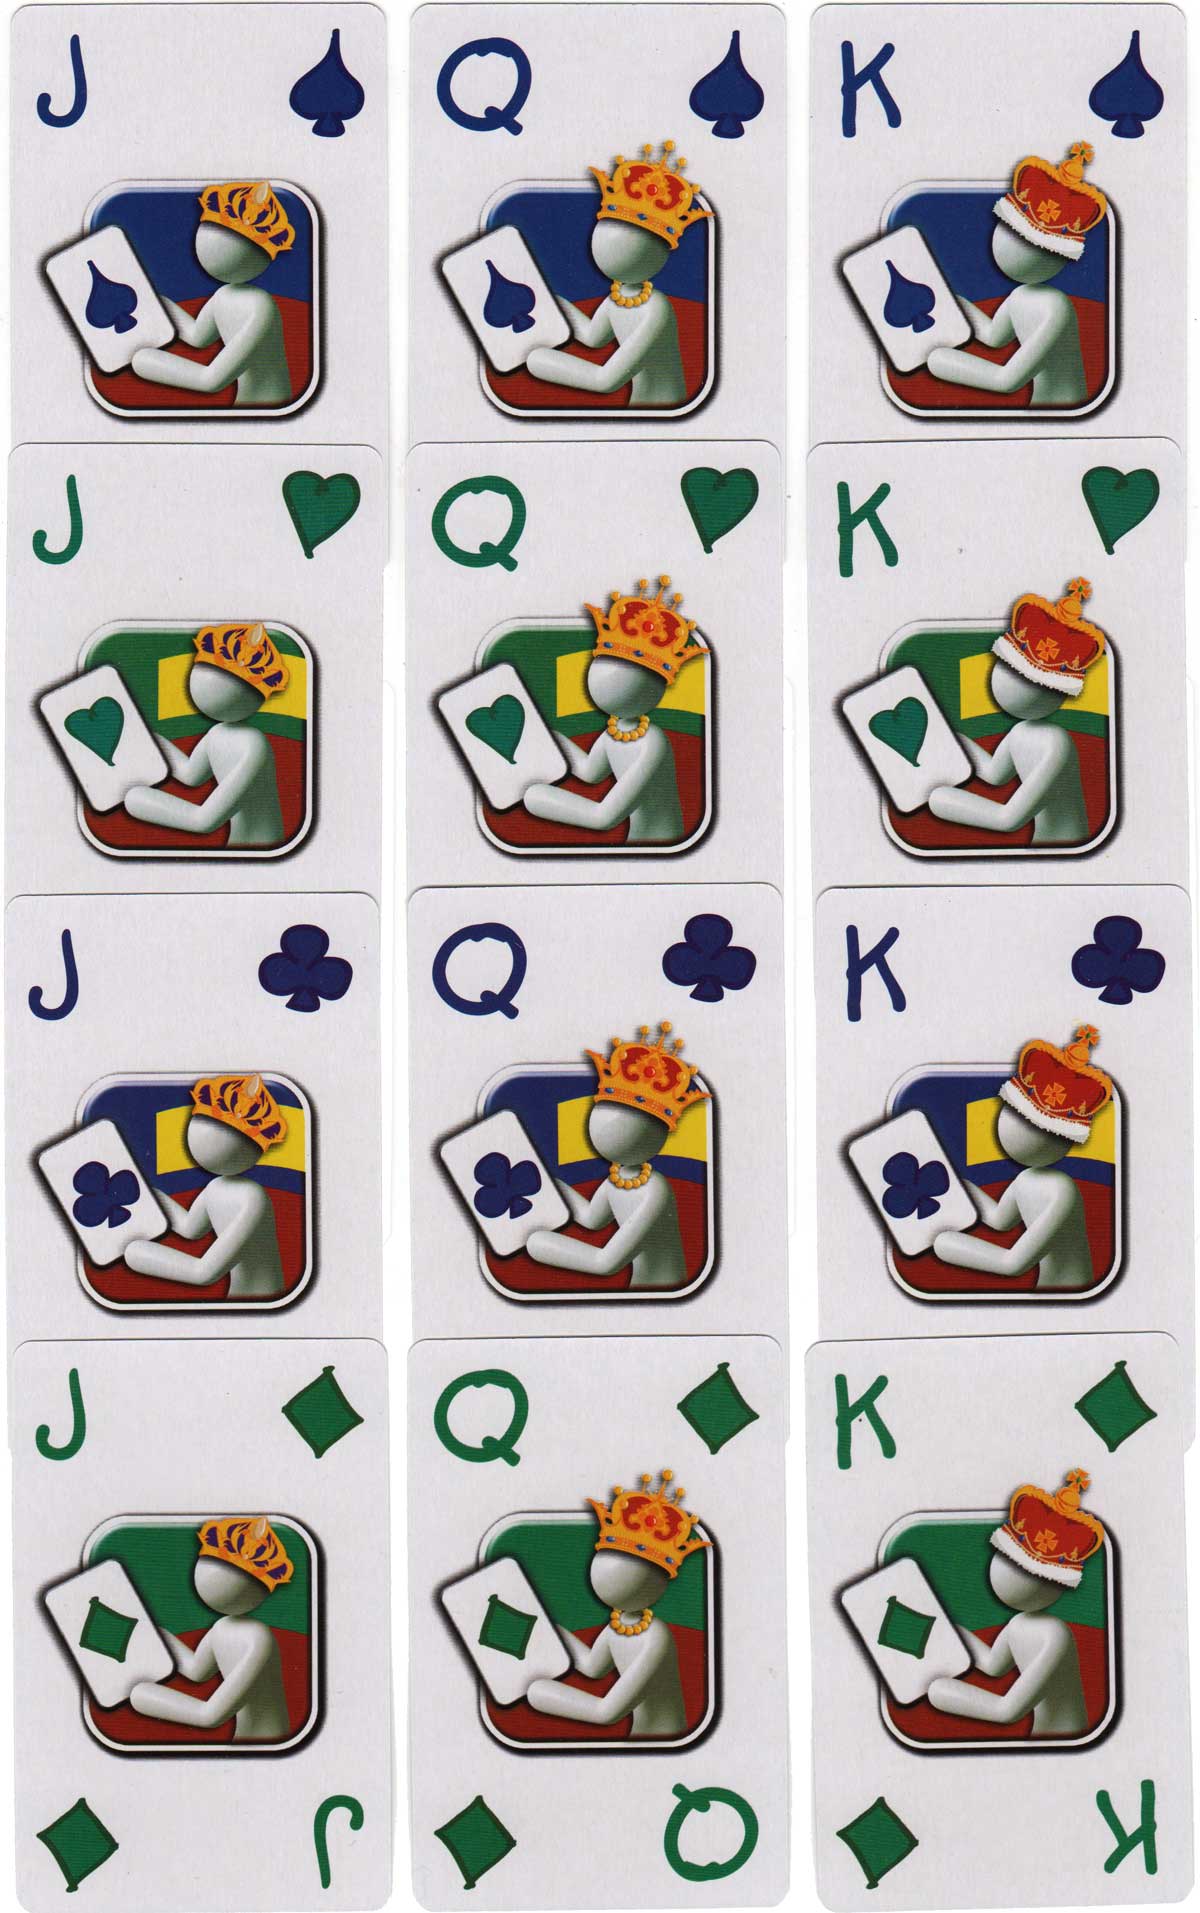 Benadryl® family fun playing cards published by Johnson & Johnson